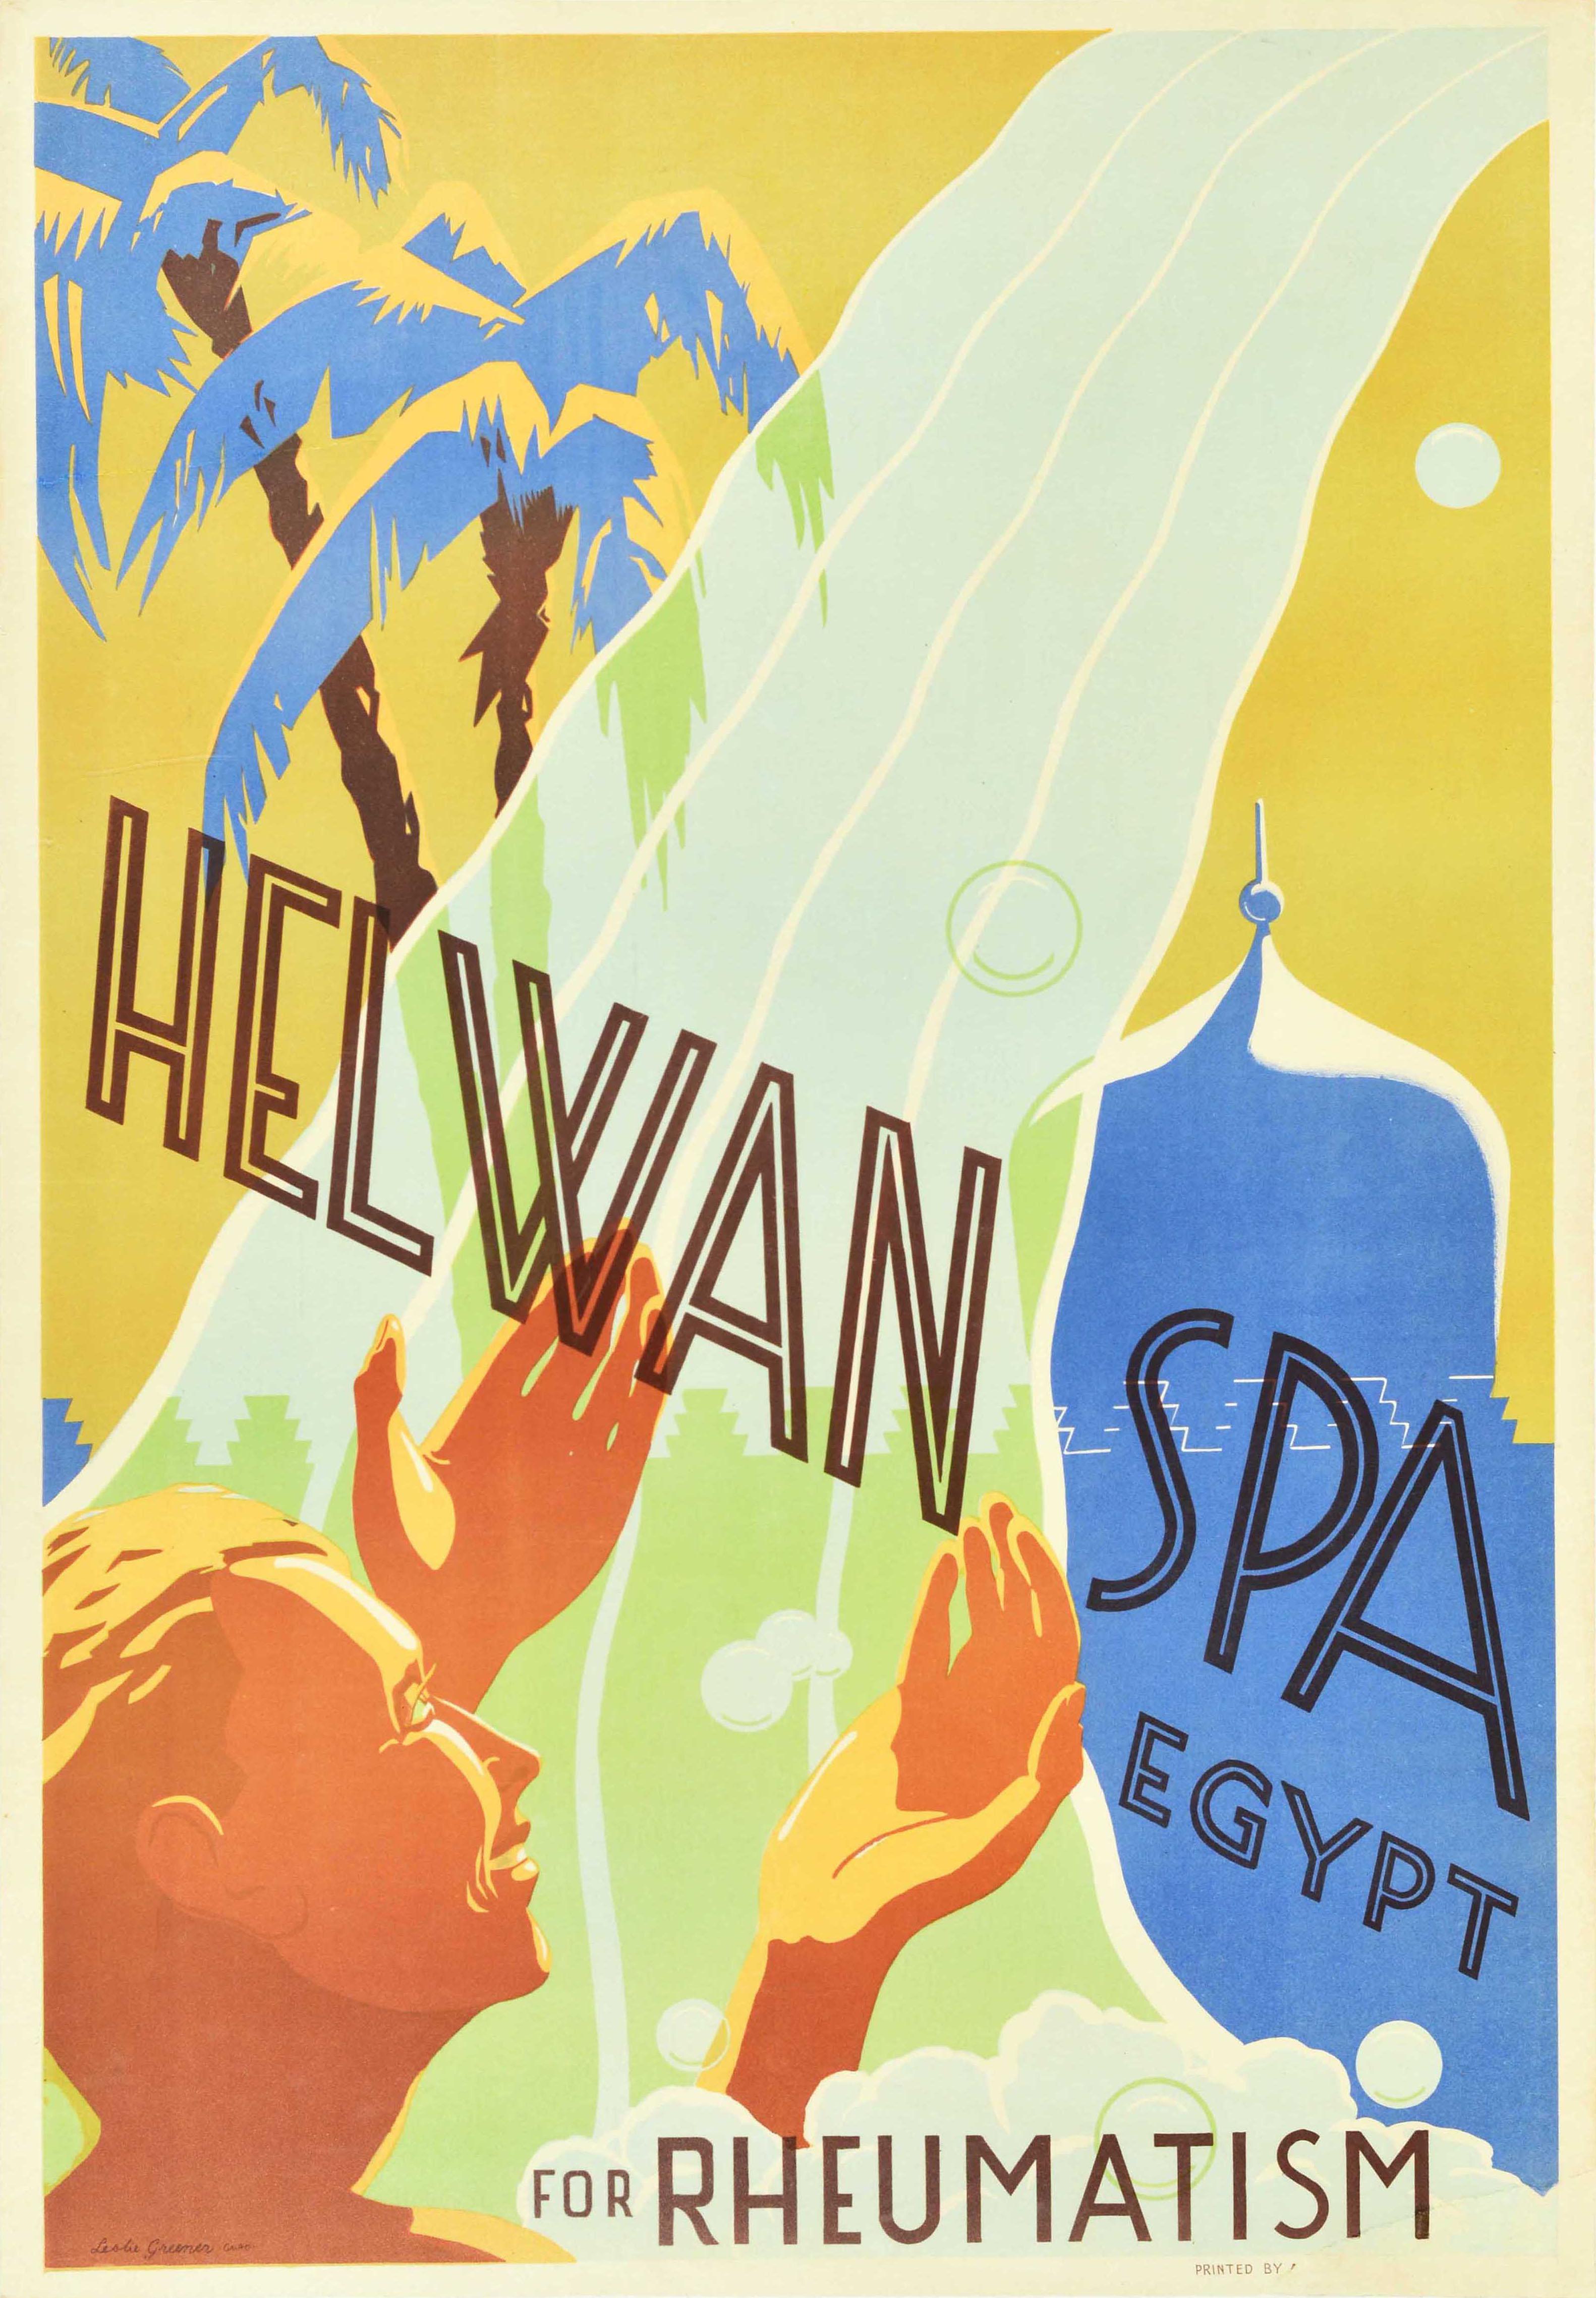 Herbert Leslie Greener Print – Original Antikes Original-Poster Helwan Spa Ägypten für Rheumatism Gesundheit Wasser Reise Kunst